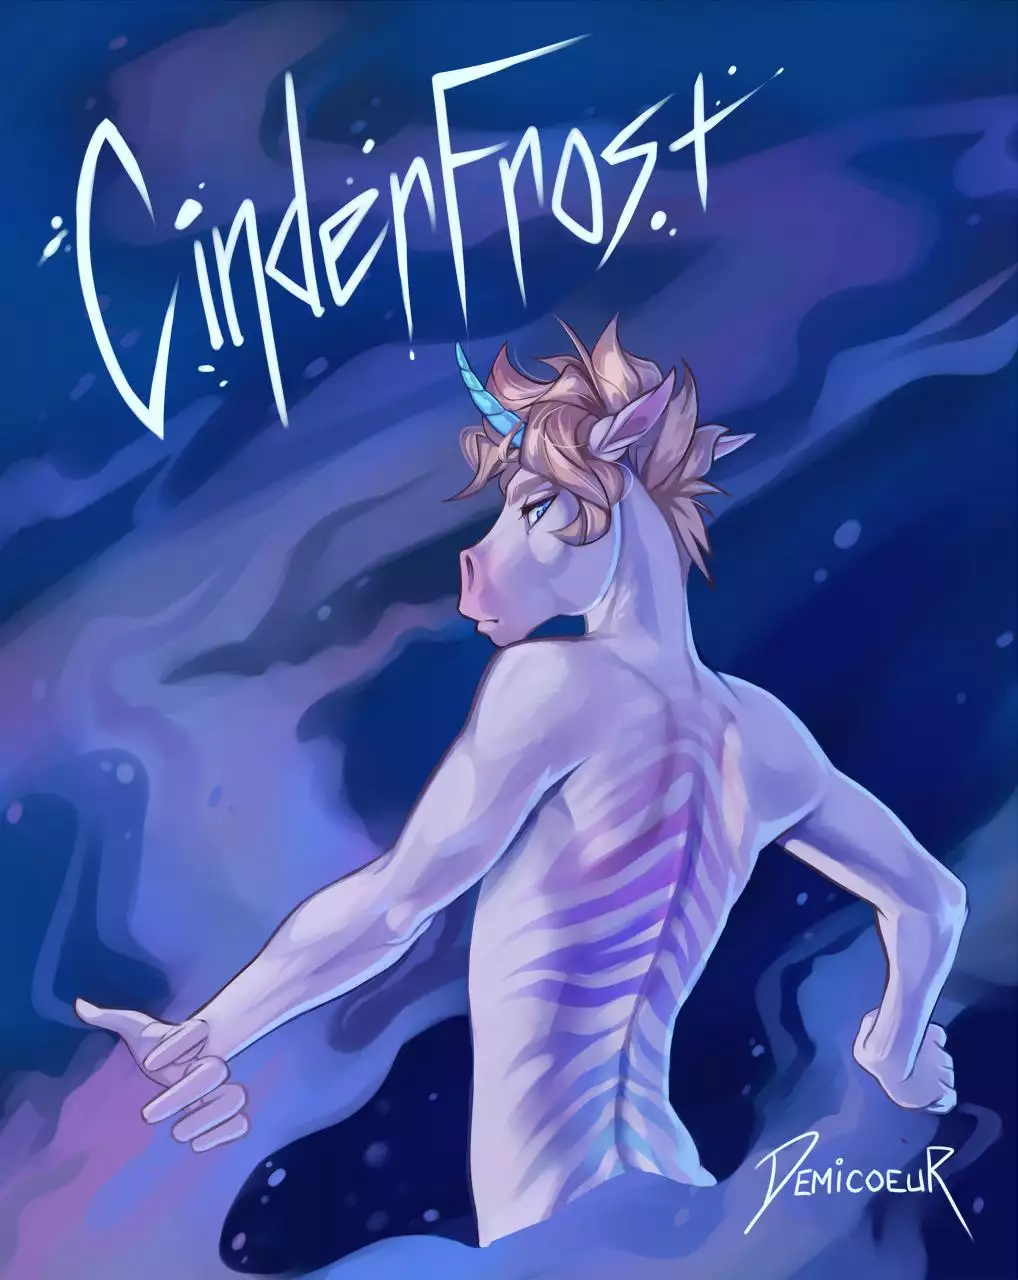 CinderFrost - Chapter 2 1